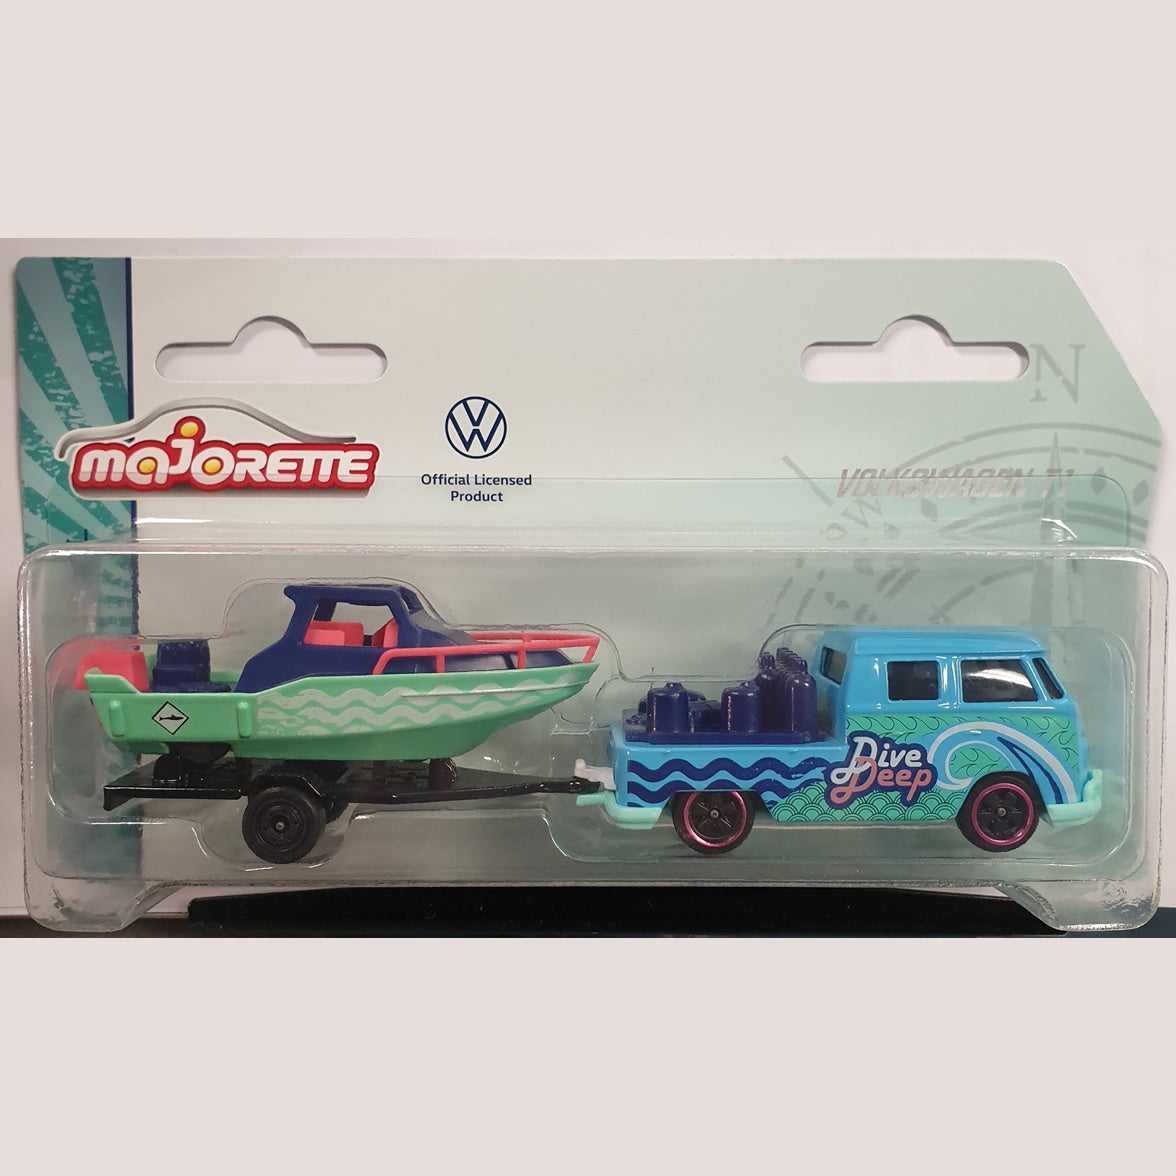 Majorette - Majorette - Volkswagen Car and Trailer - VW T1 with Boat